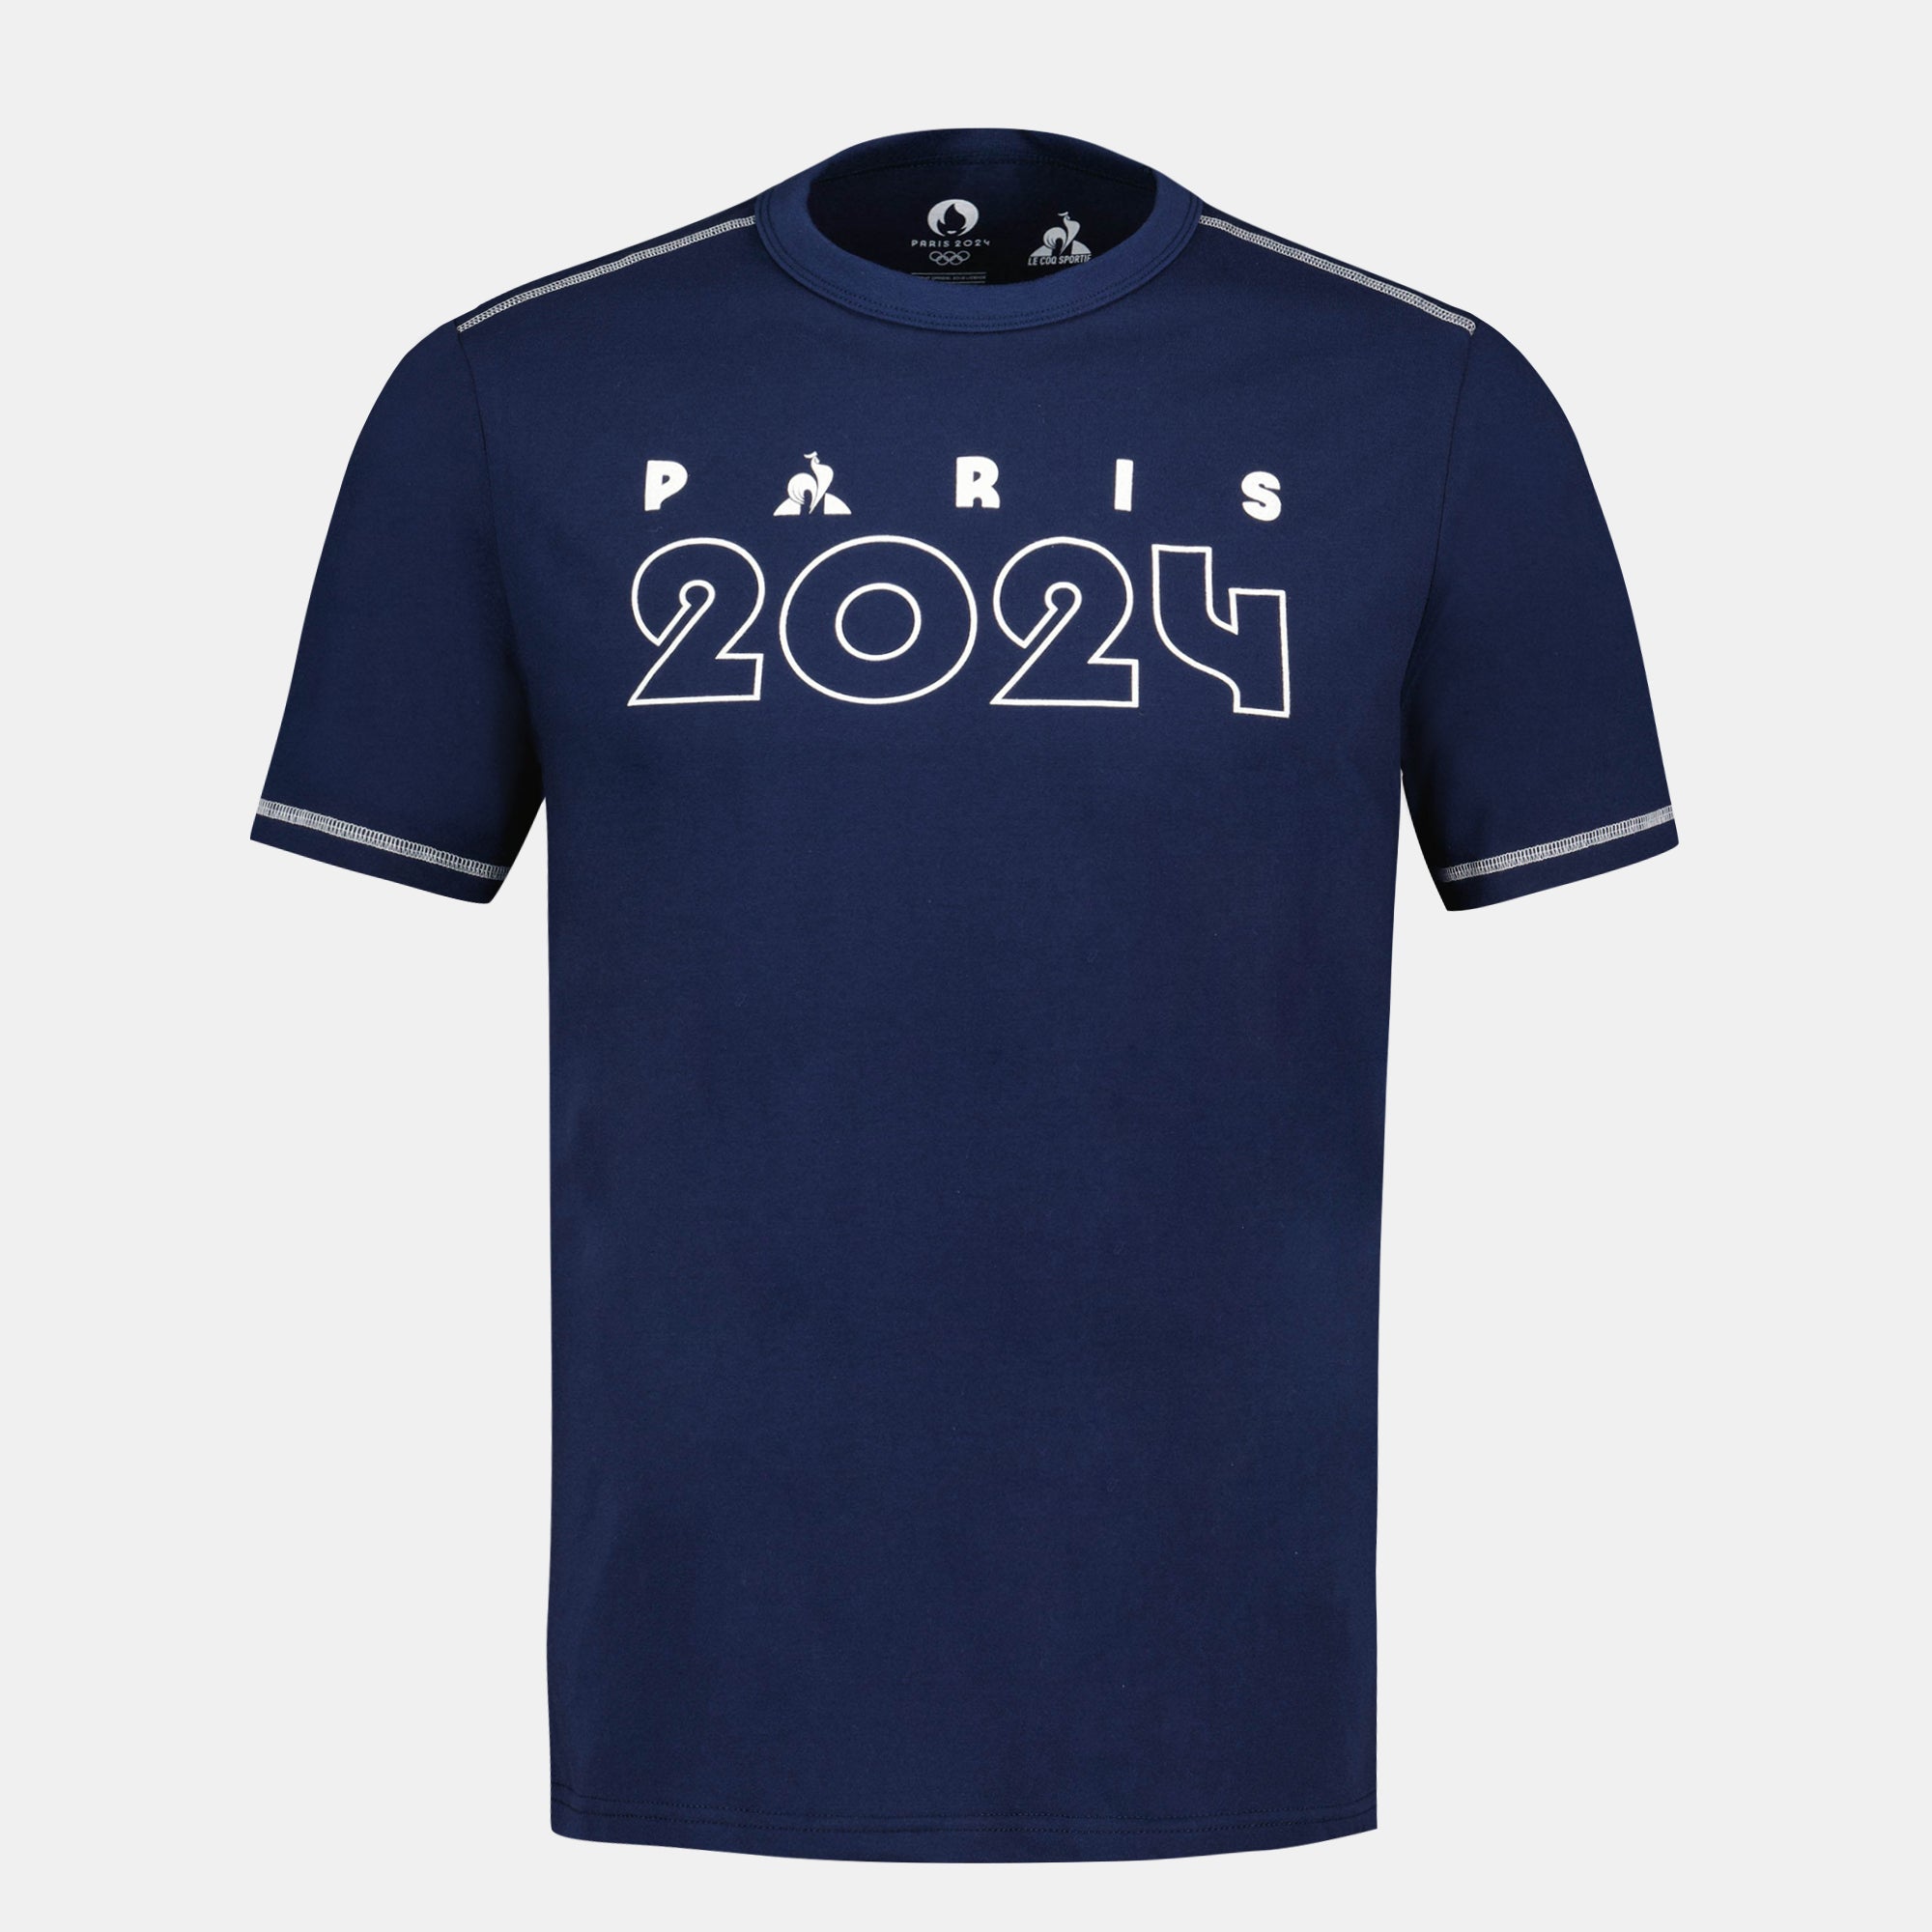 2411093-GRAPHIC P24 Tee SS N°2 M bleu nuit  | Camiseta Hombre